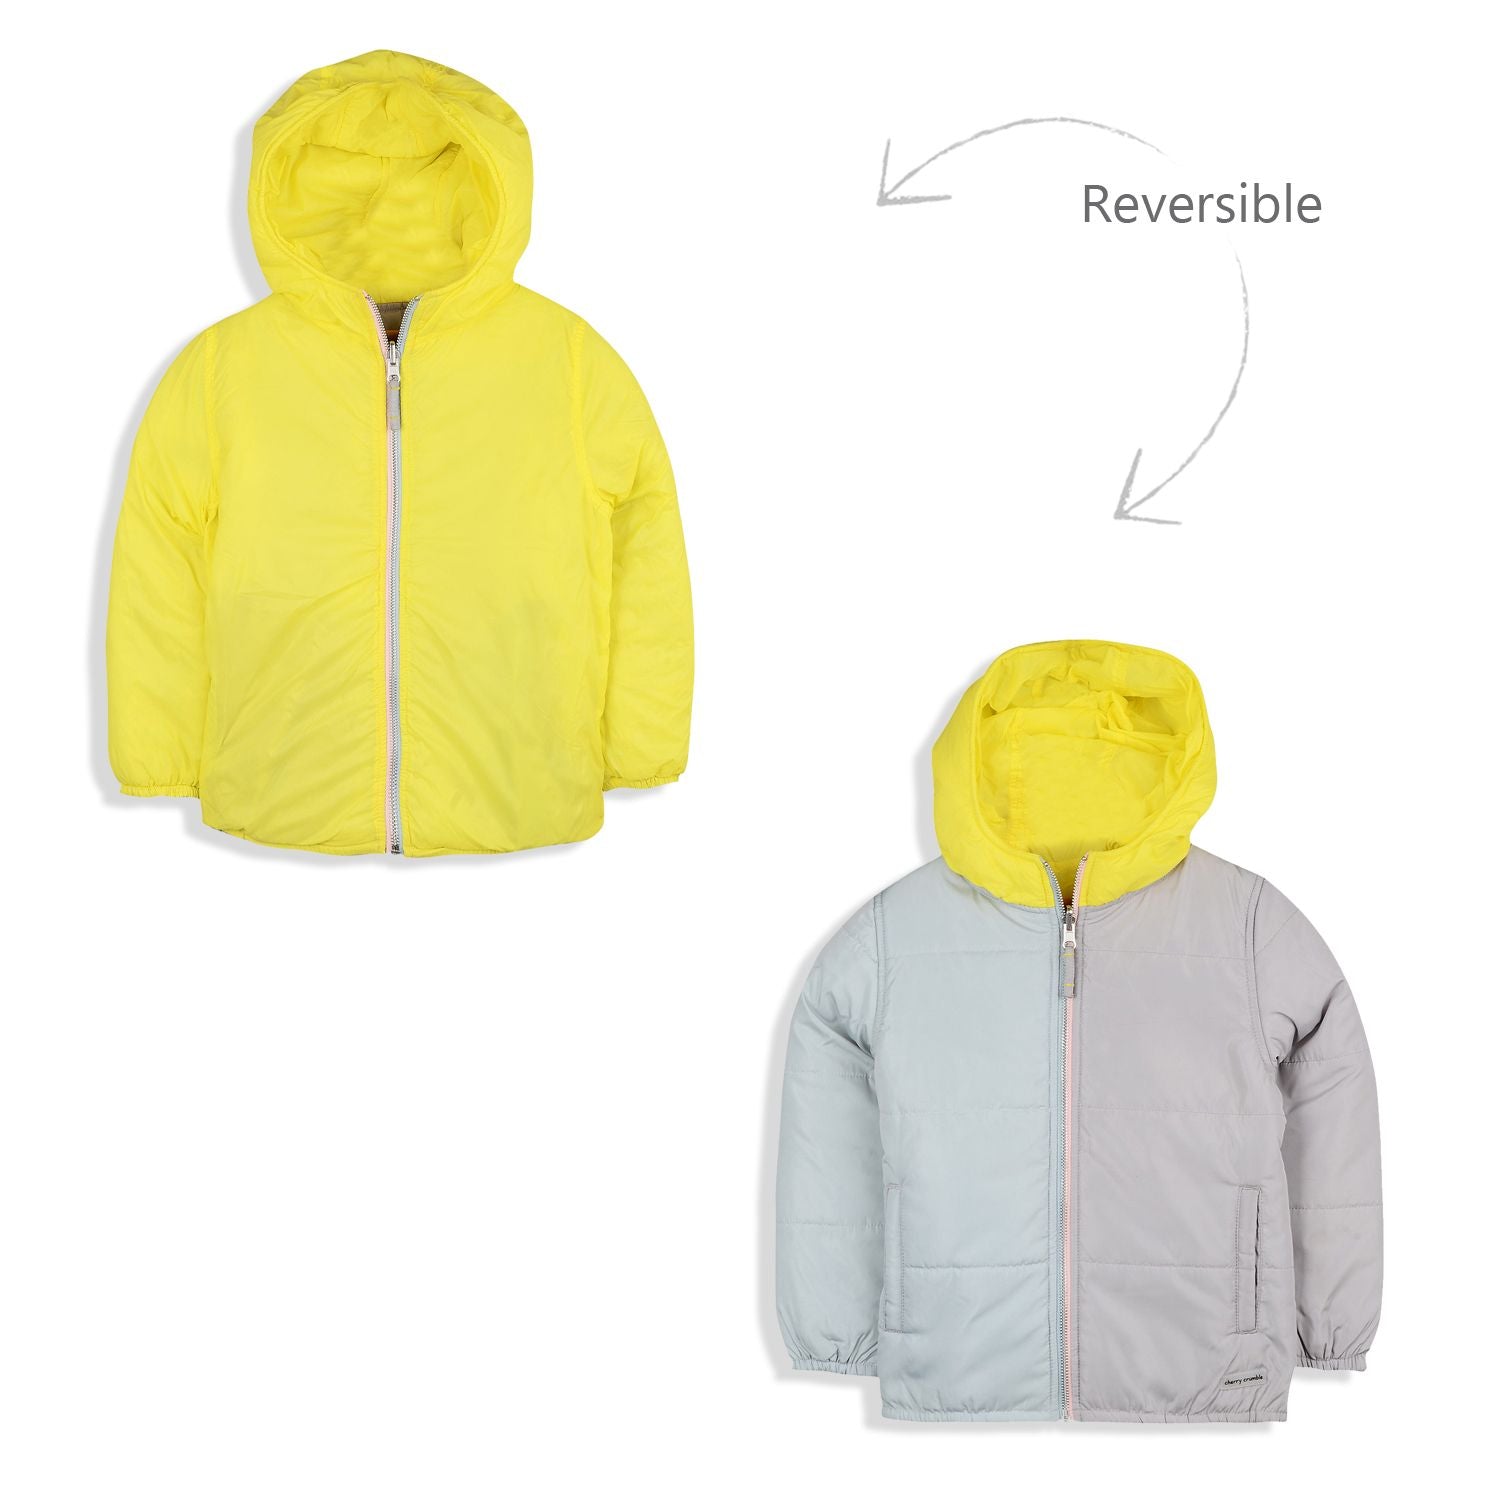 Sunny Reversible Jacket for kids